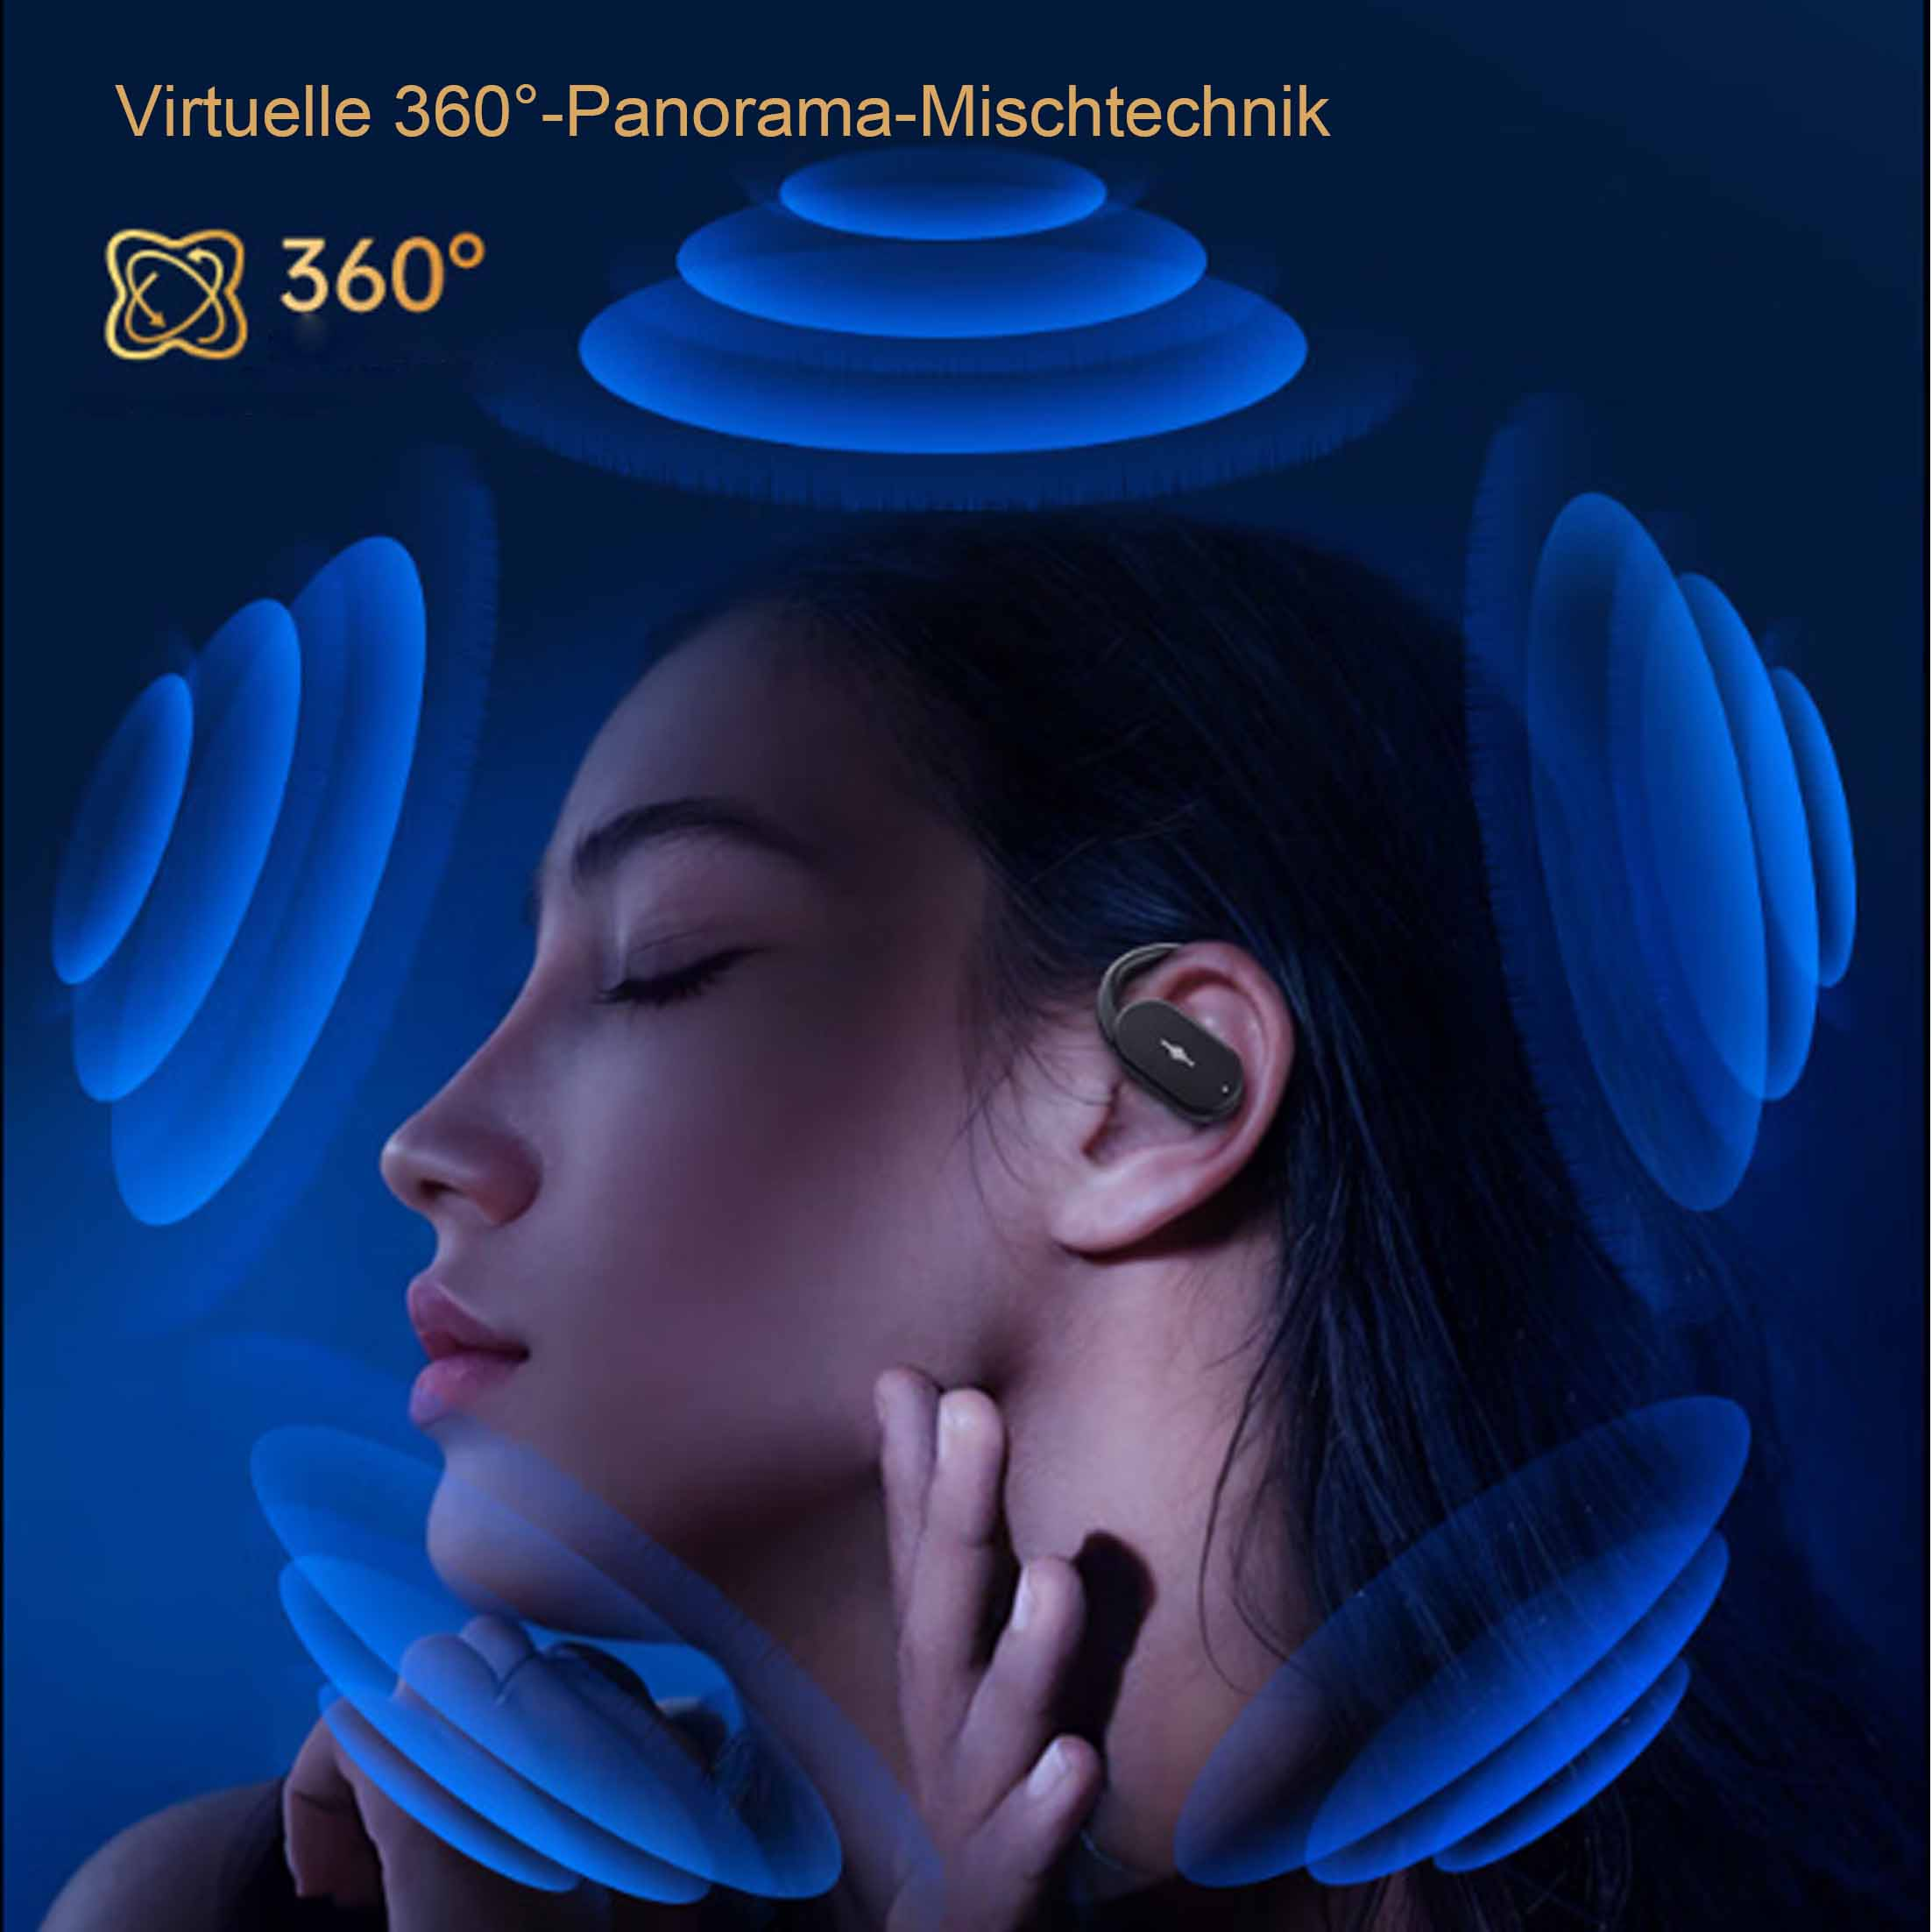 DIIDA geräuschunterdrückung, drahtlos, On-ear Bluetooth-Kopfhörer Schwarz